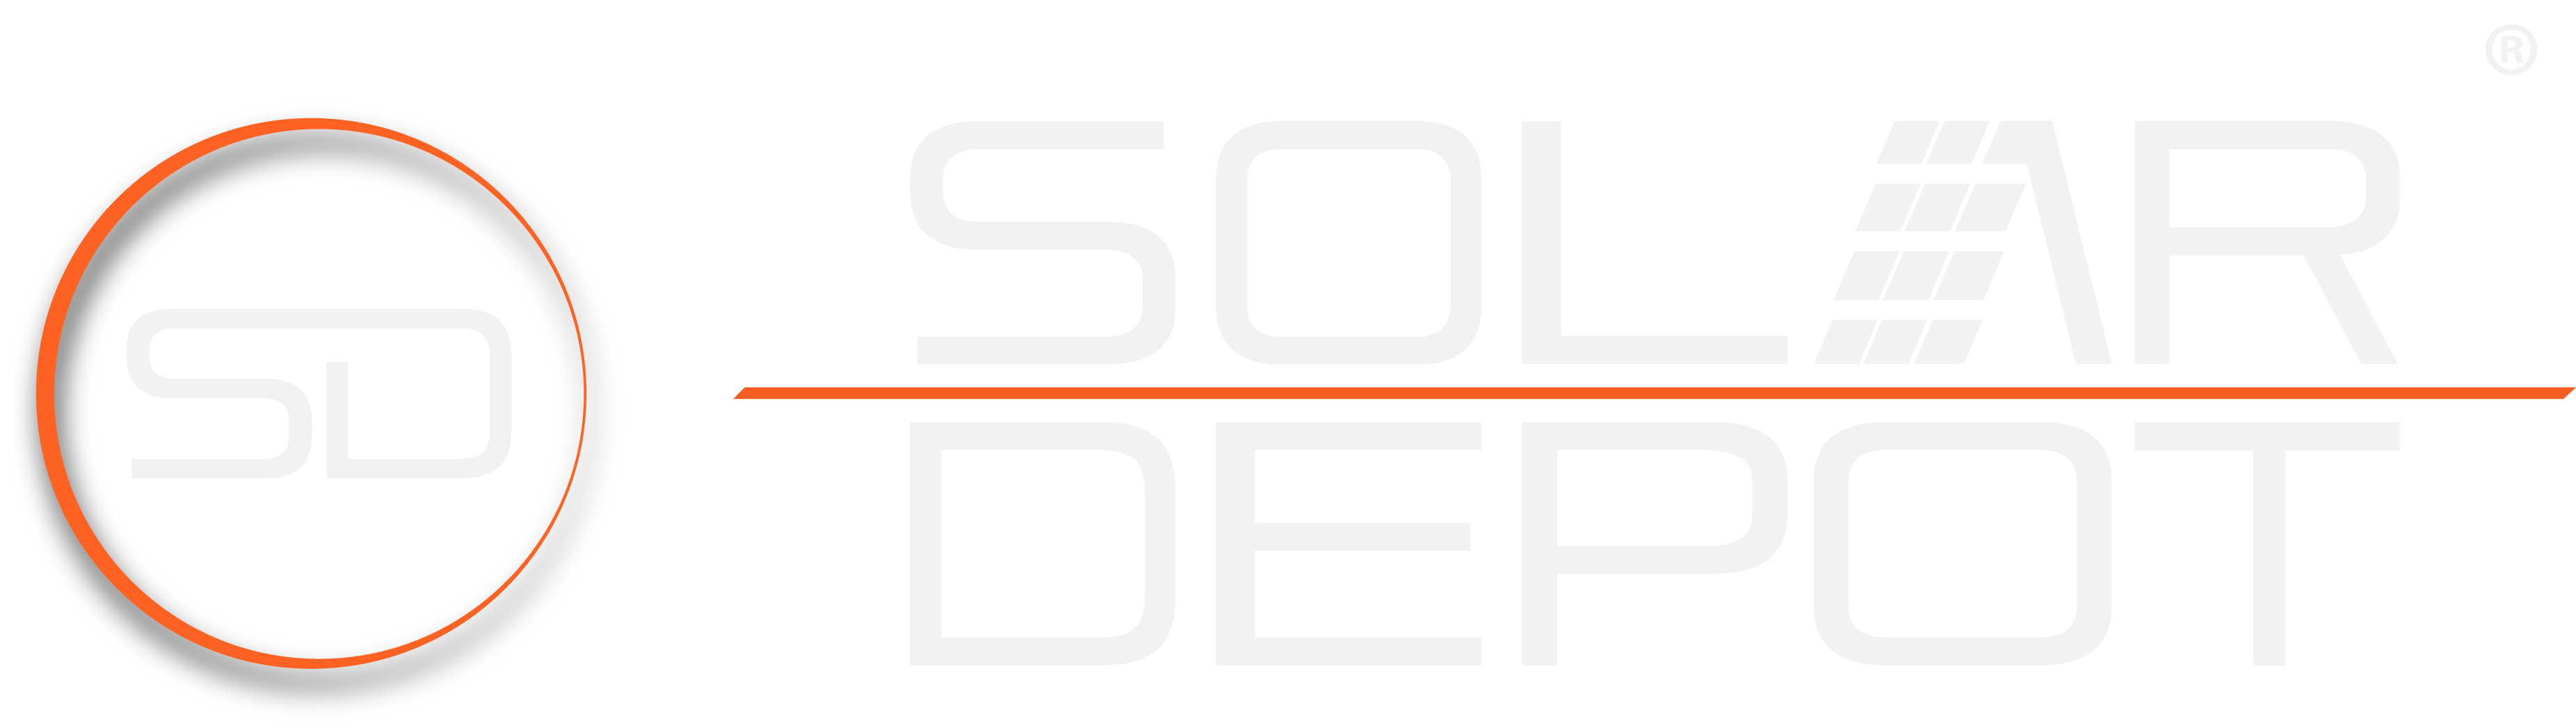 karriere-solar-depot